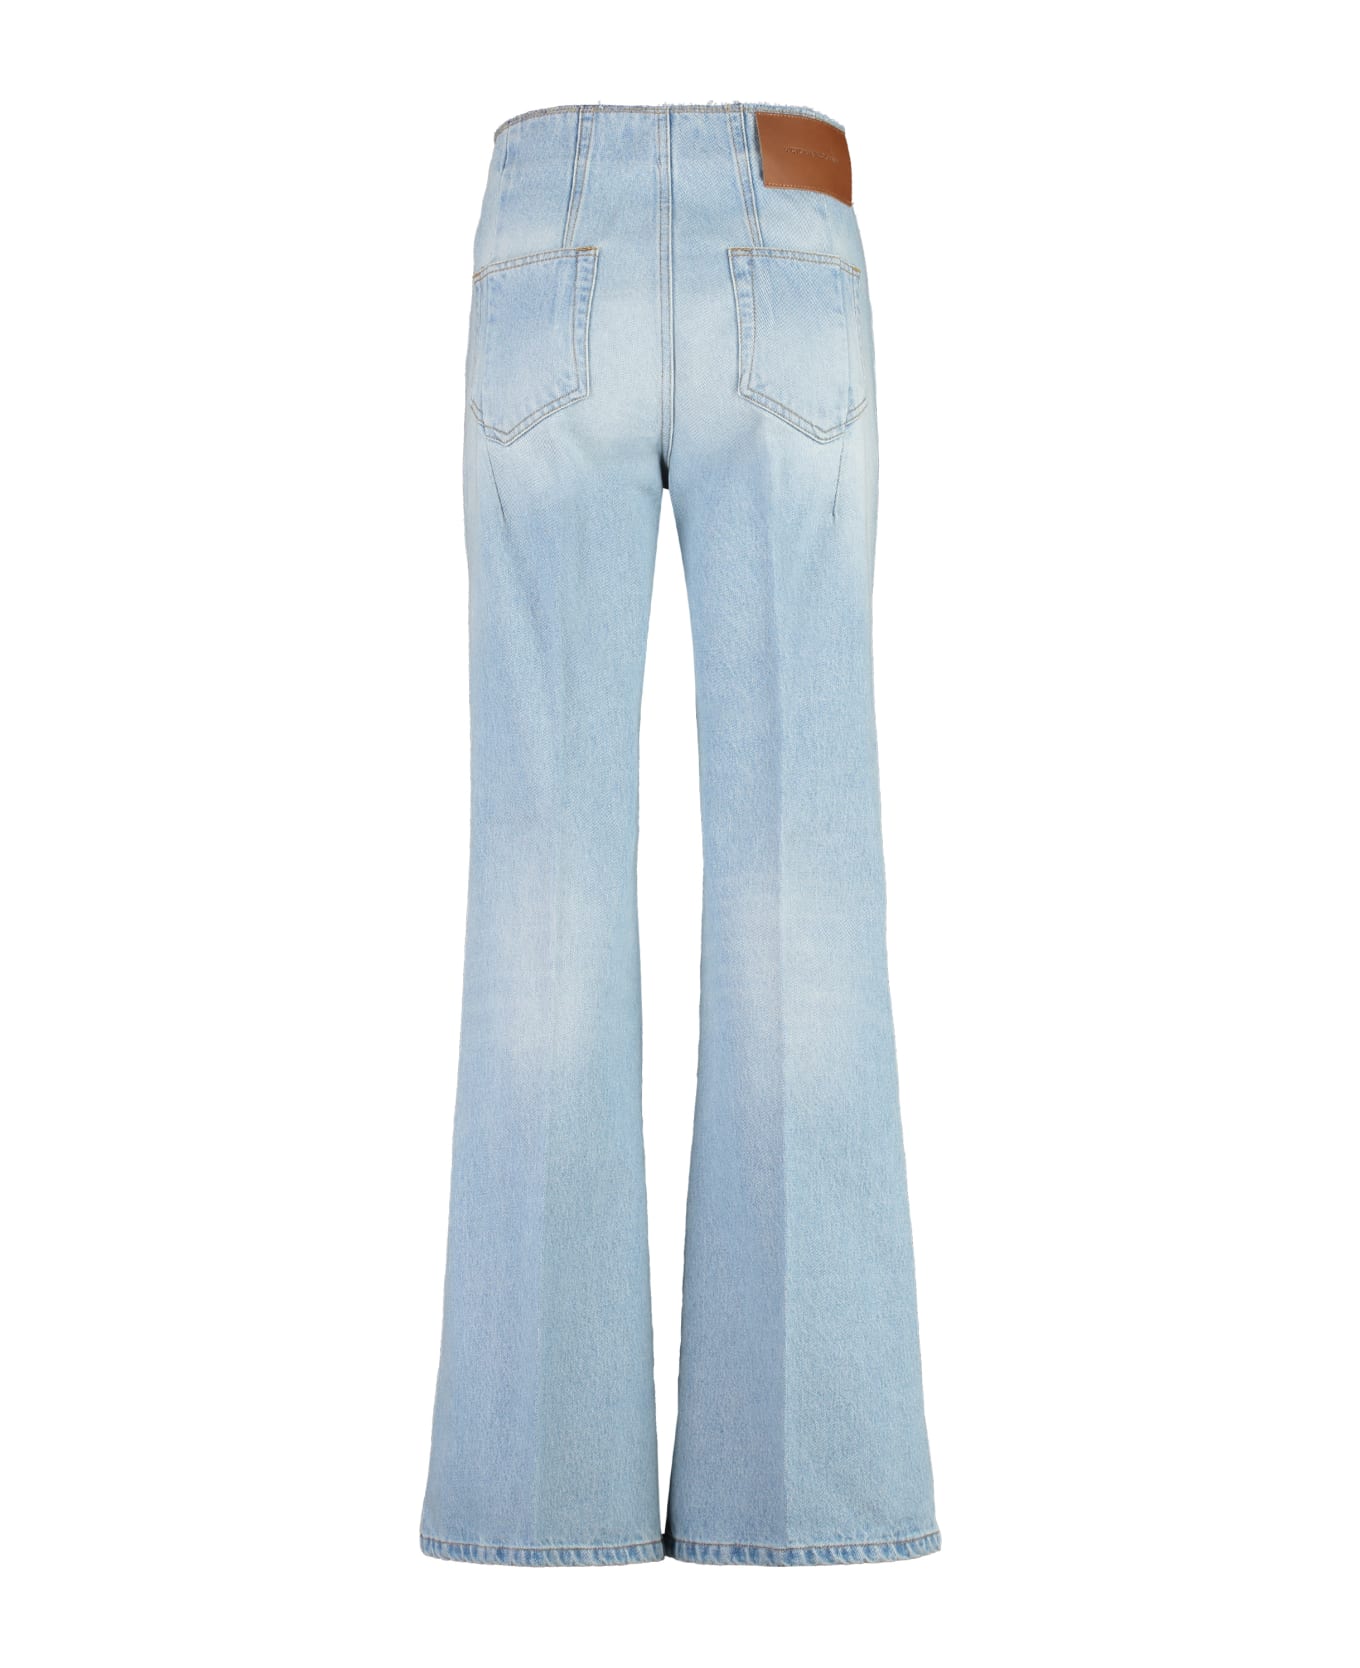 Victoria Beckham High-rise Flared Jeans - Denim